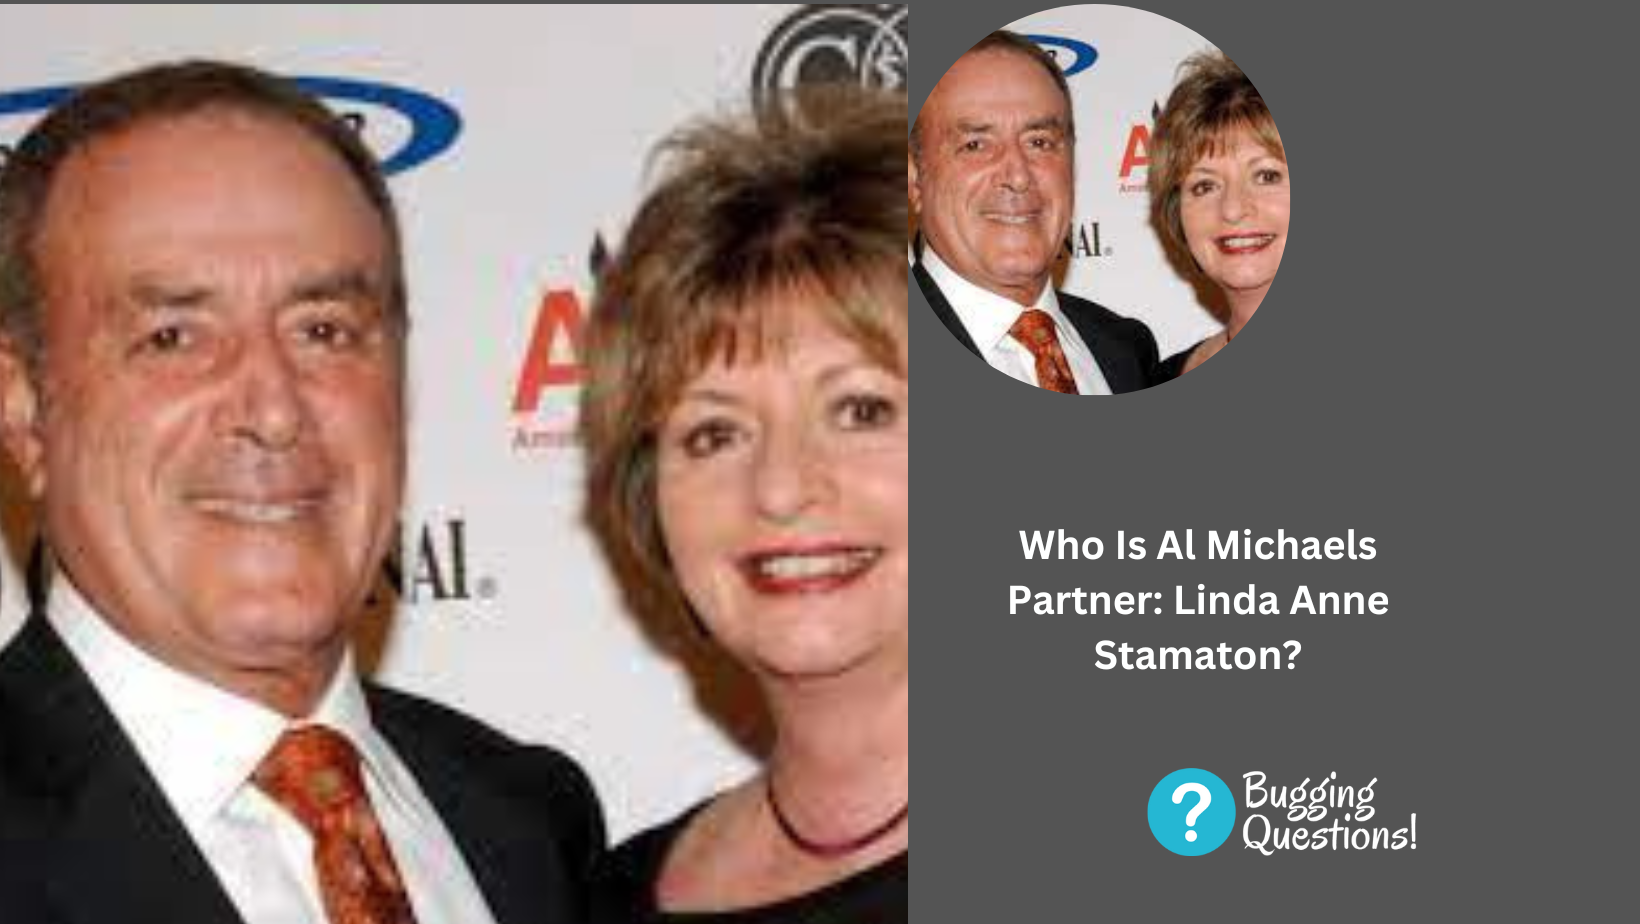 Who Is Al Michaels Partner: Linda Anne Stamaton?